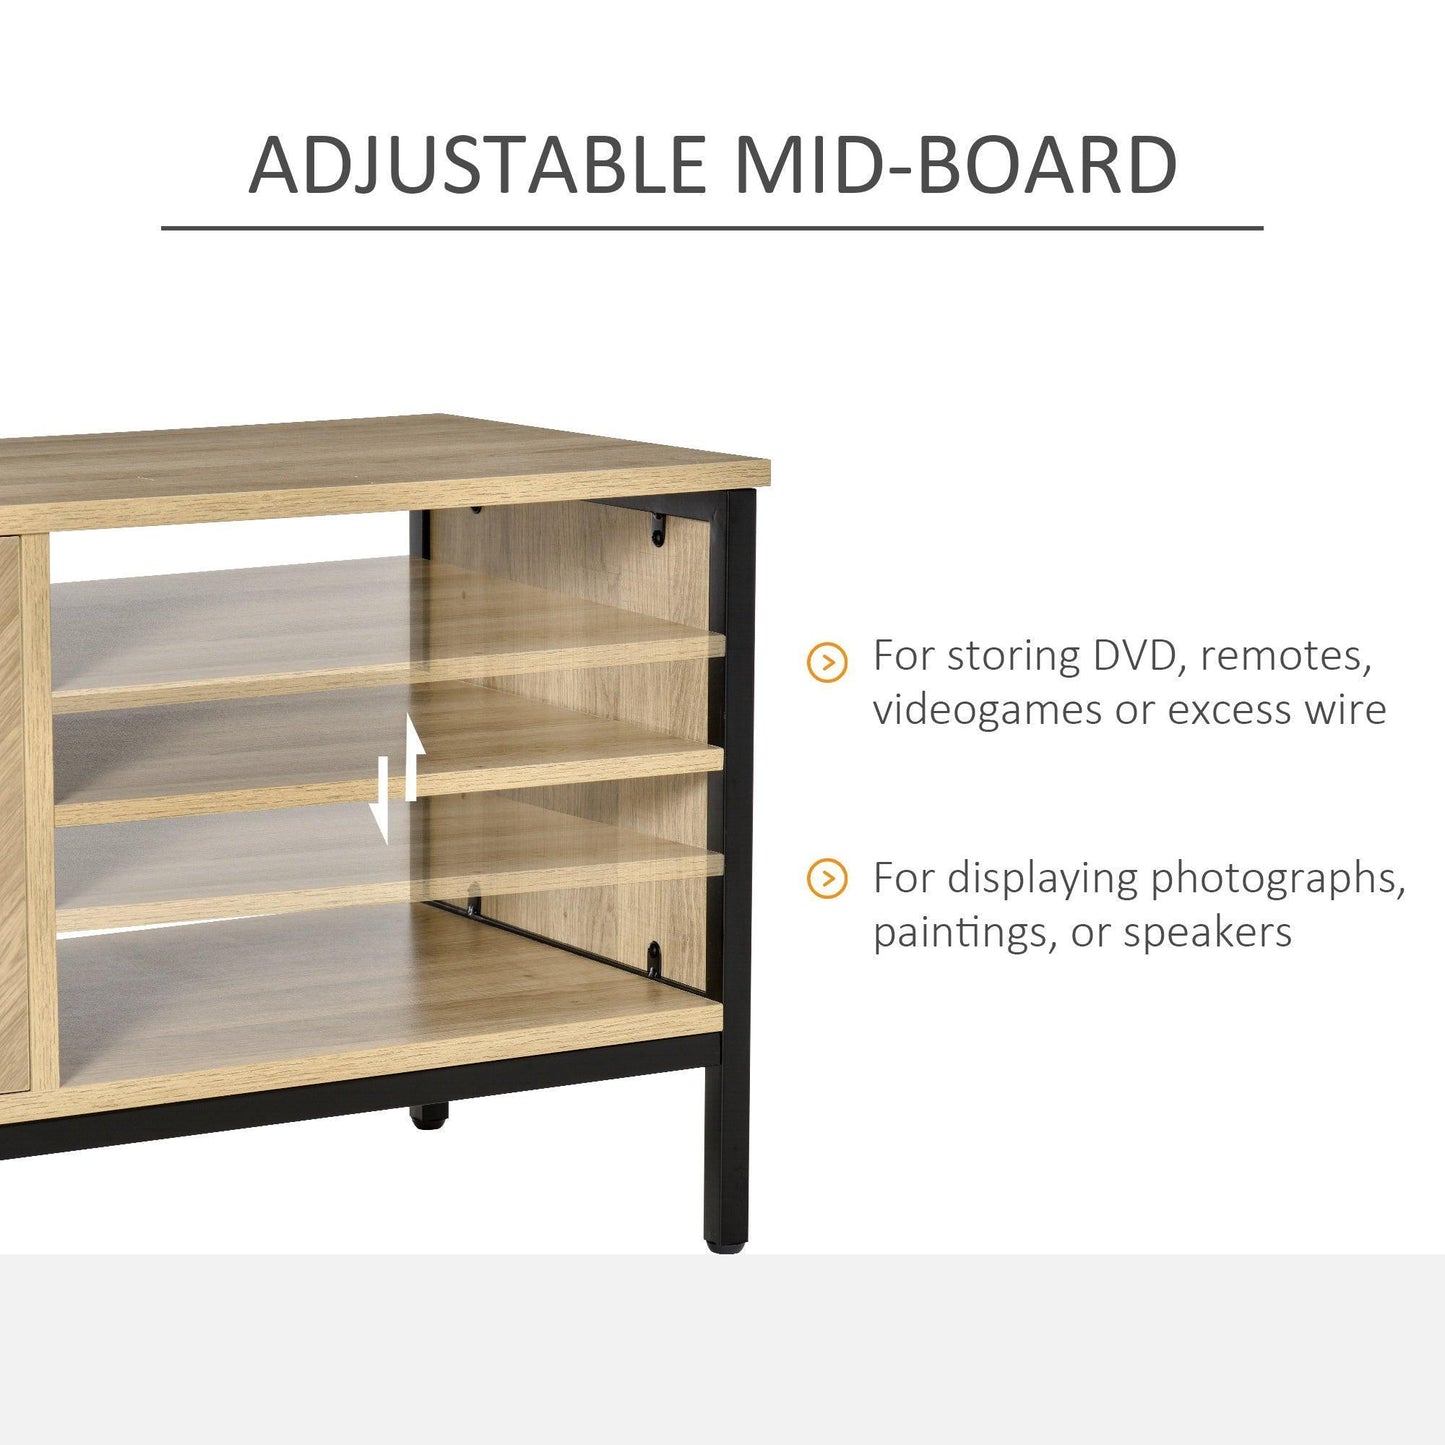 HOMCOM Adjustable Shelves TV Cabinet Stand - Sleek Design - ALL4U RETAILER LTD